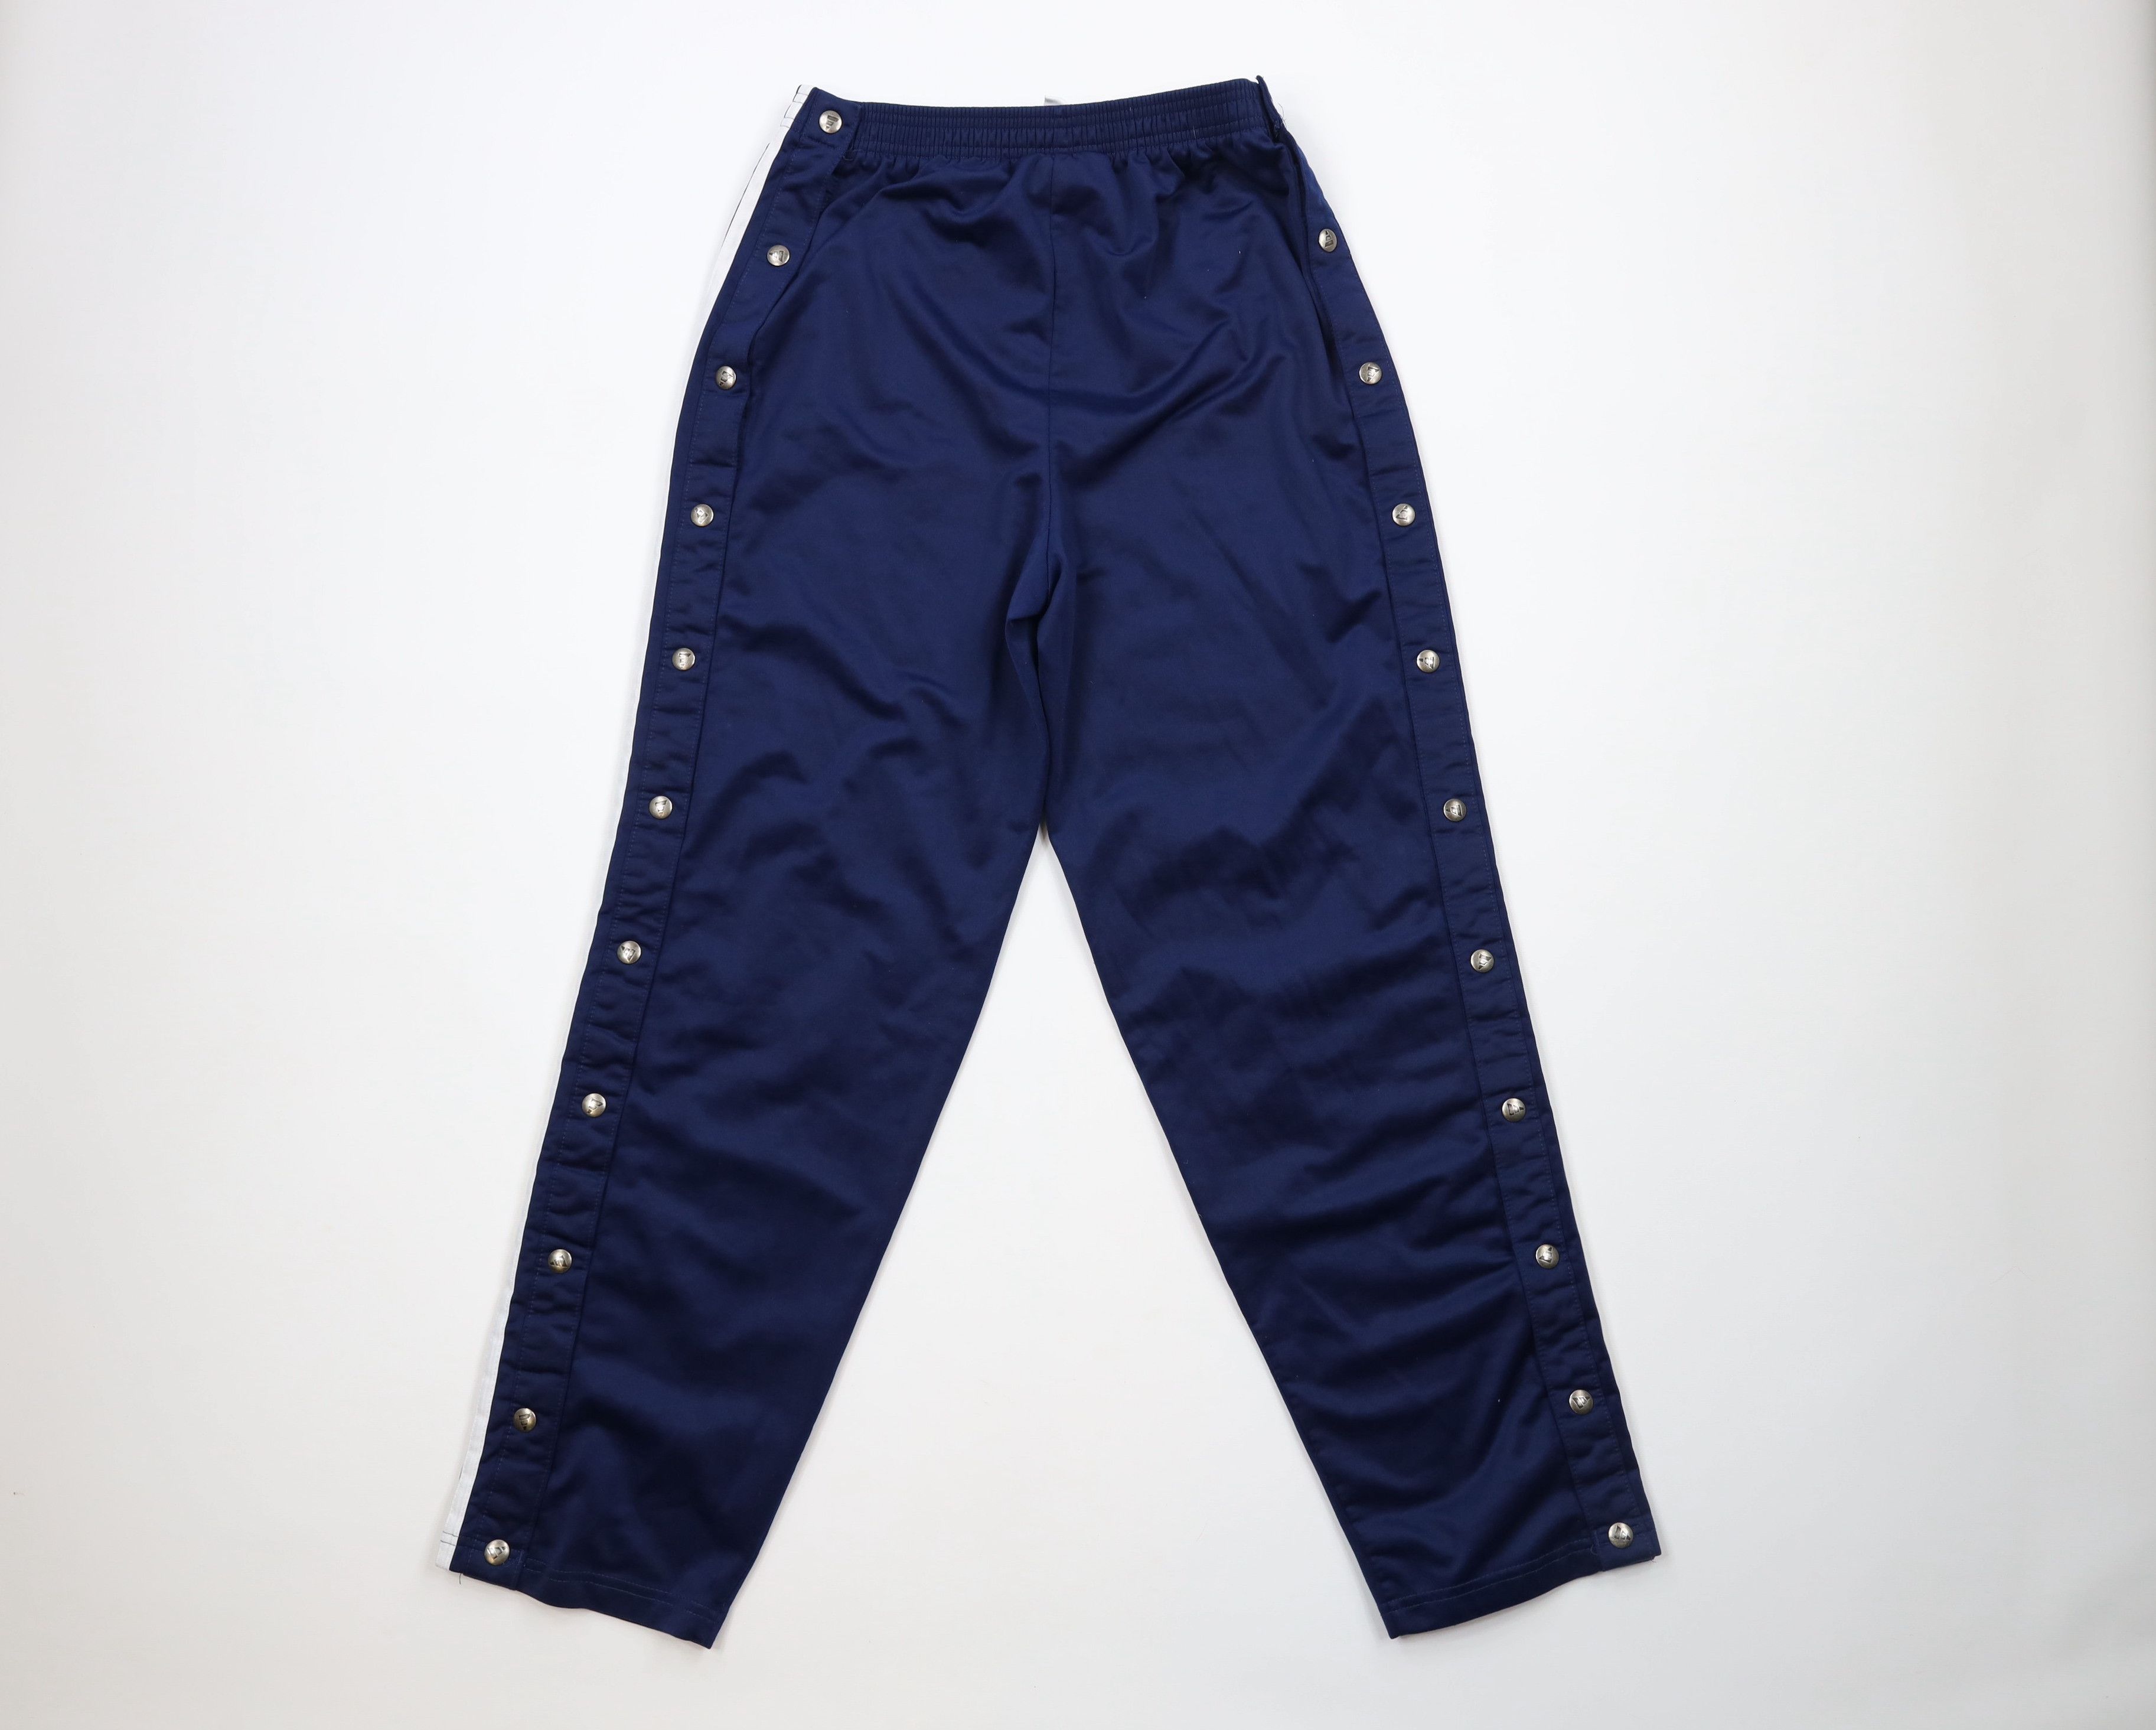 Adidas Vintage 90s Adidas Striped Tearaway Sweatpants Pants Blue Size US 34 / EU 50 - 8 Thumbnail